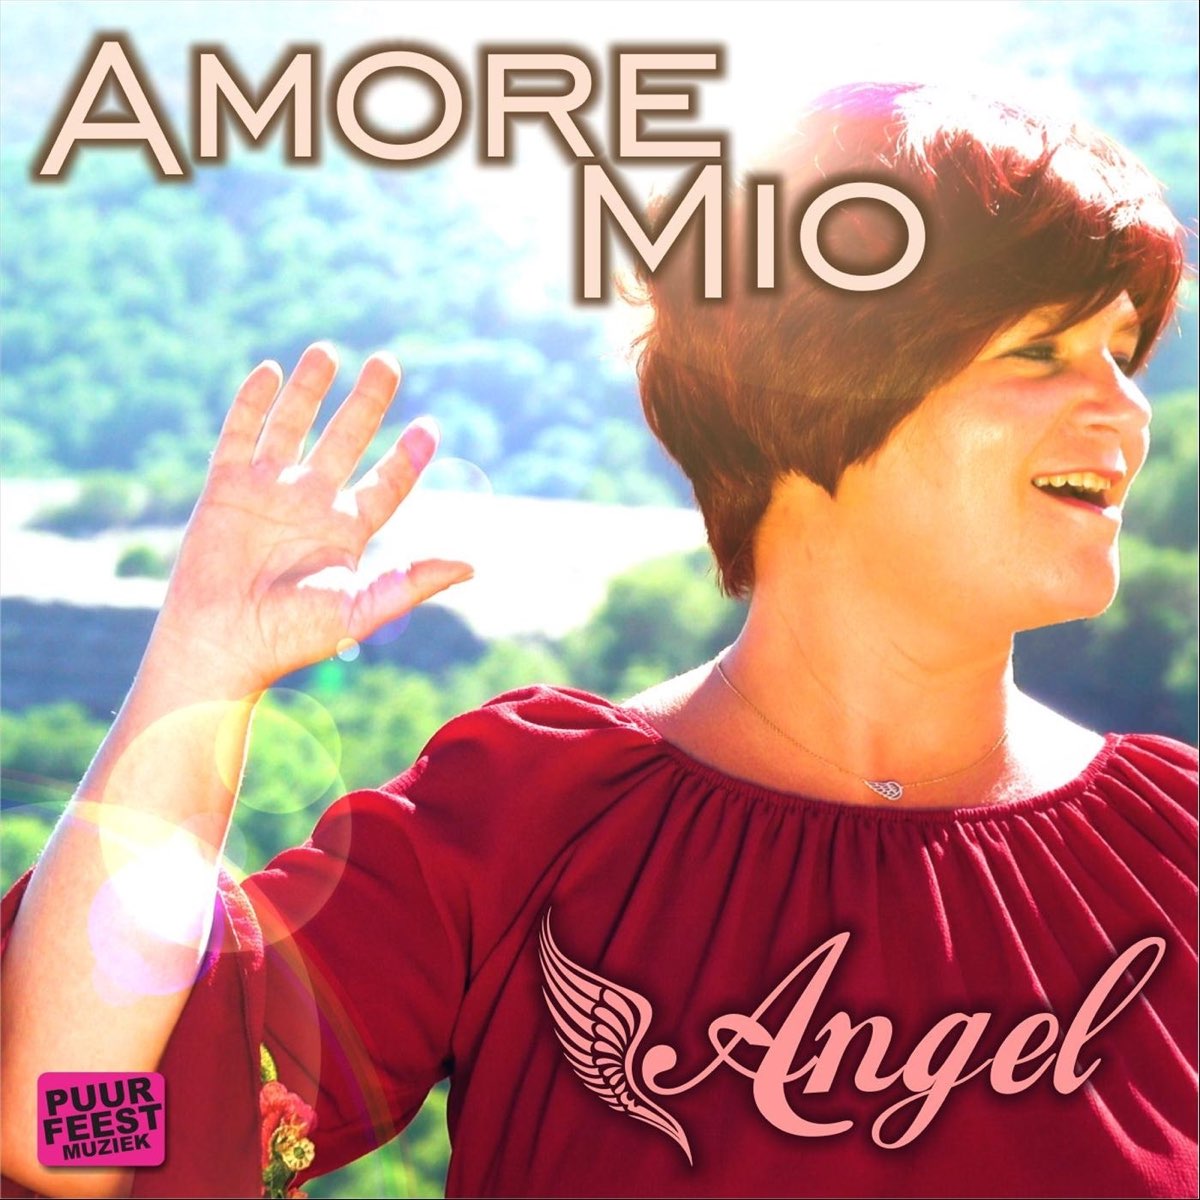 Amore mio mp3. Аморе Мио песня. Amore mio песня итальянская. Амоде ми Аморе ми. Песня. А море море Мио.